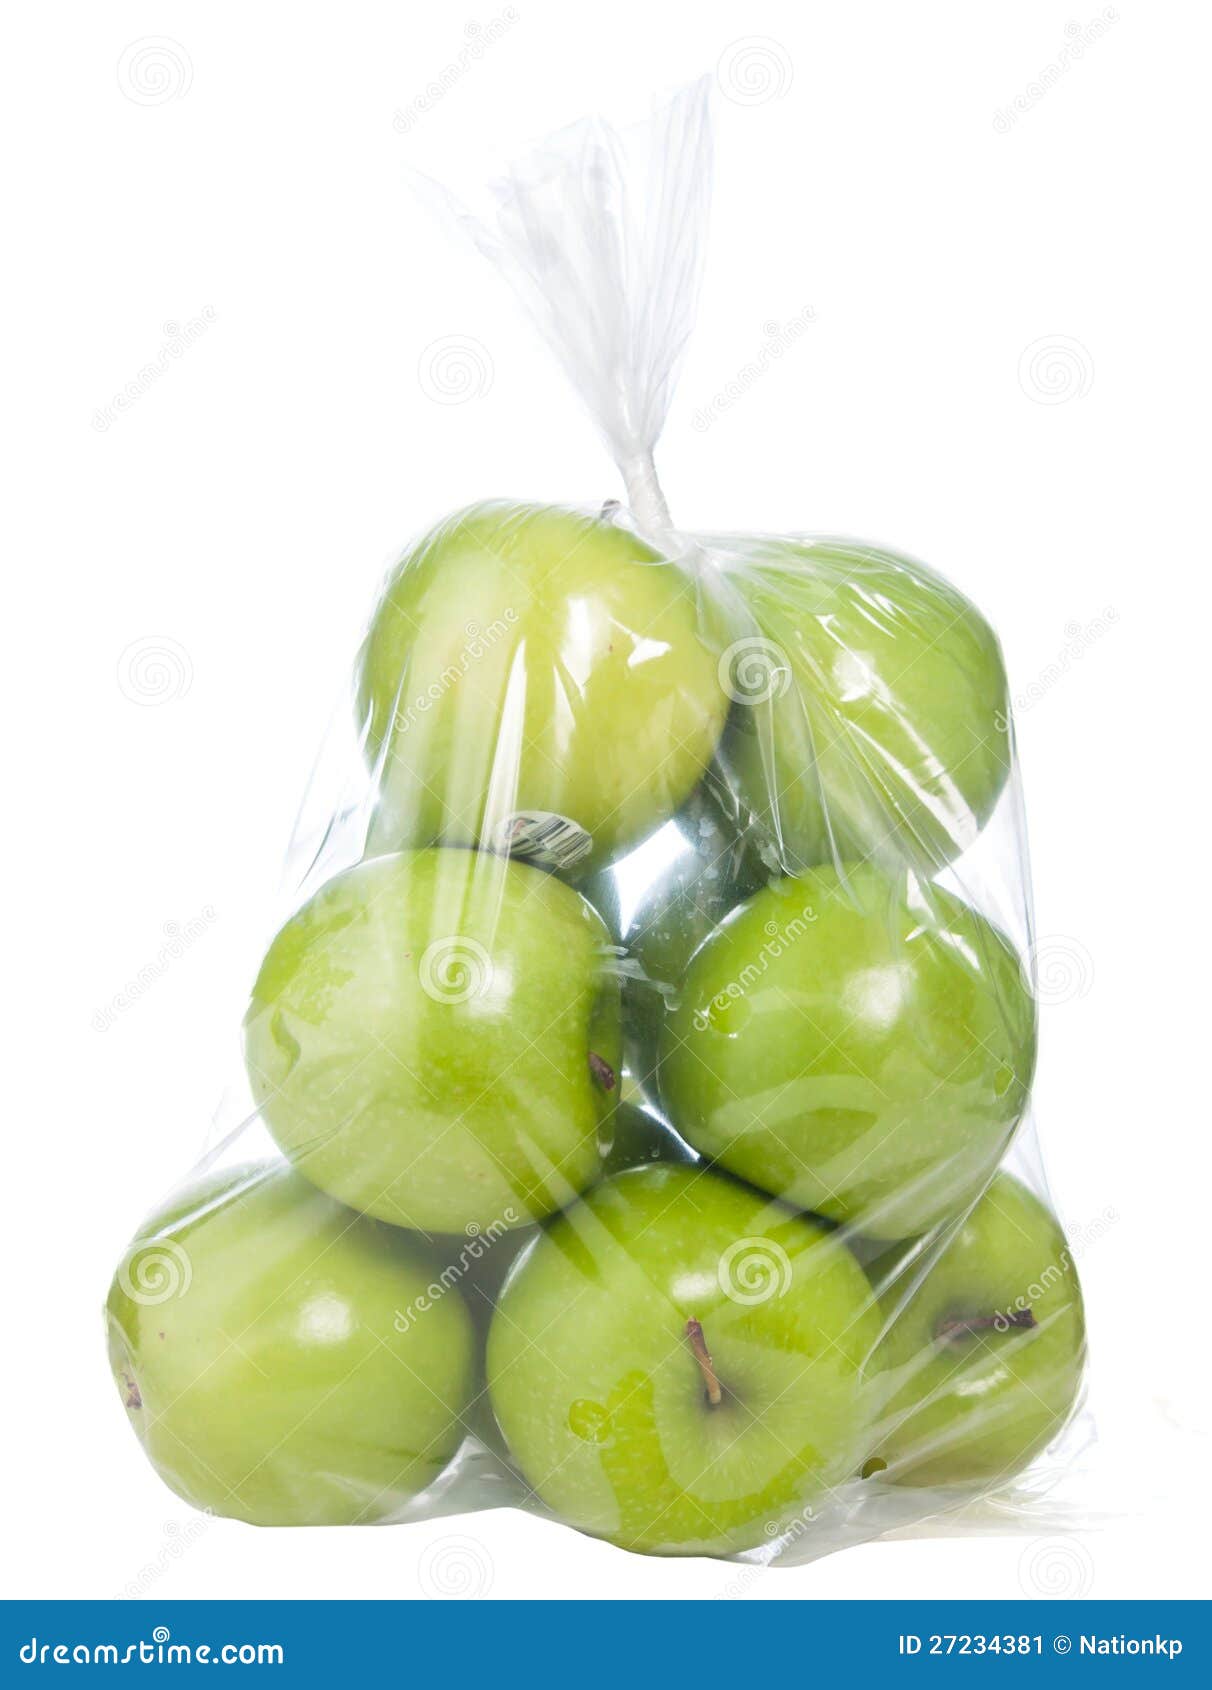 Farmer's Market Red Delicious Apples 3lb Bag - 1.36 kg | Extra Foods